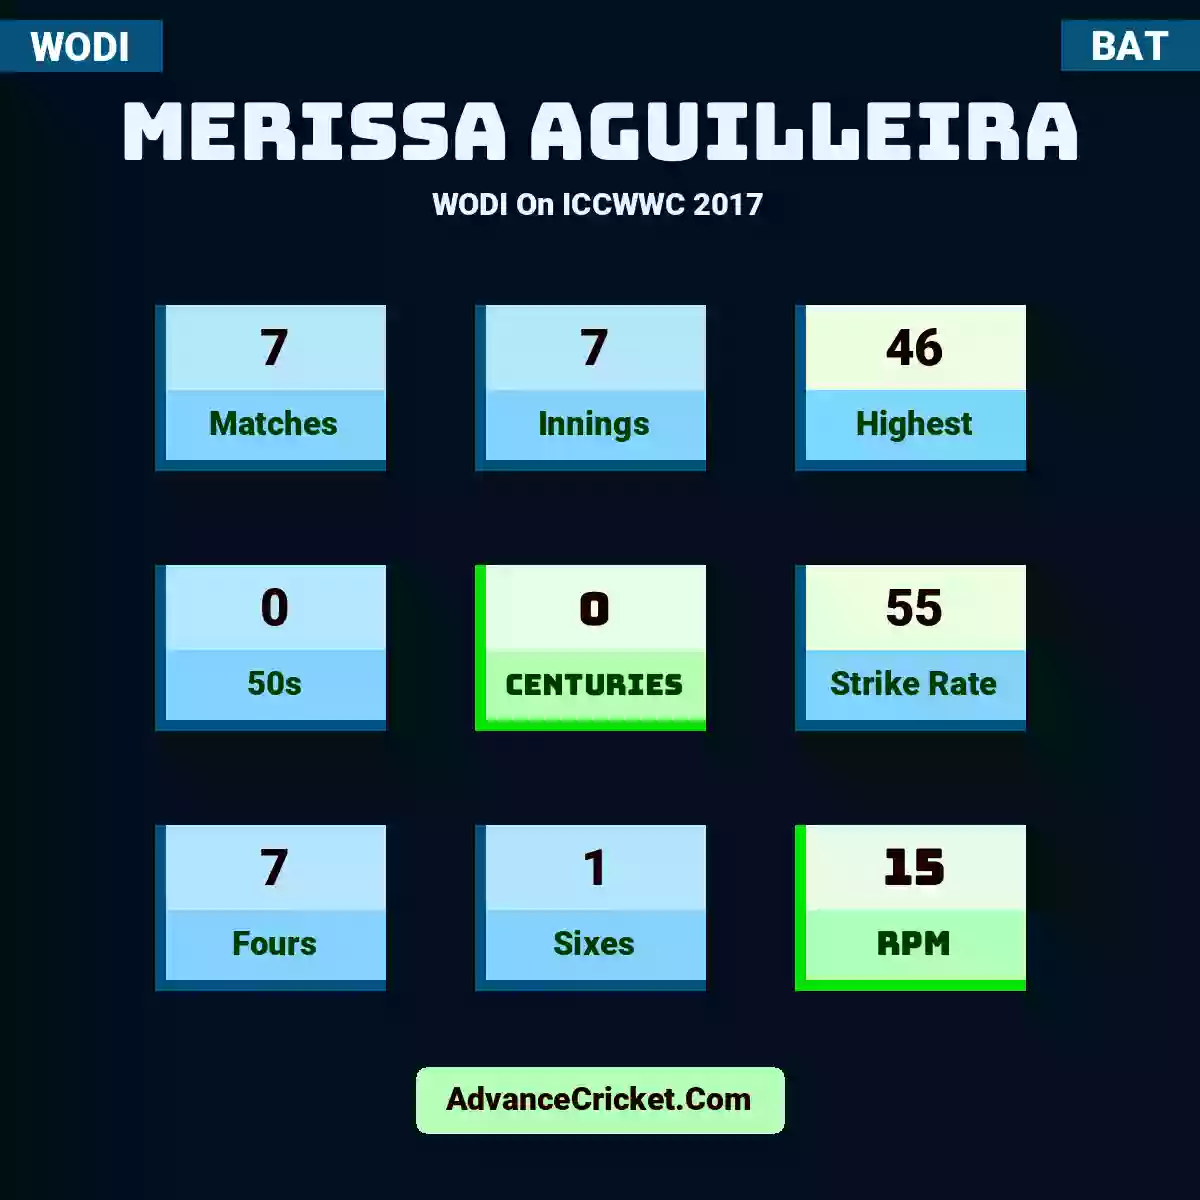 Merissa Aguilleira WODI  On ICCWWC 2017, Merissa Aguilleira played 7 matches, scored 46 runs as highest, 0 half-centuries, and 0 centuries, with a strike rate of 55. M.Aguilleira hit 7 fours and 1 sixes, with an RPM of 15.